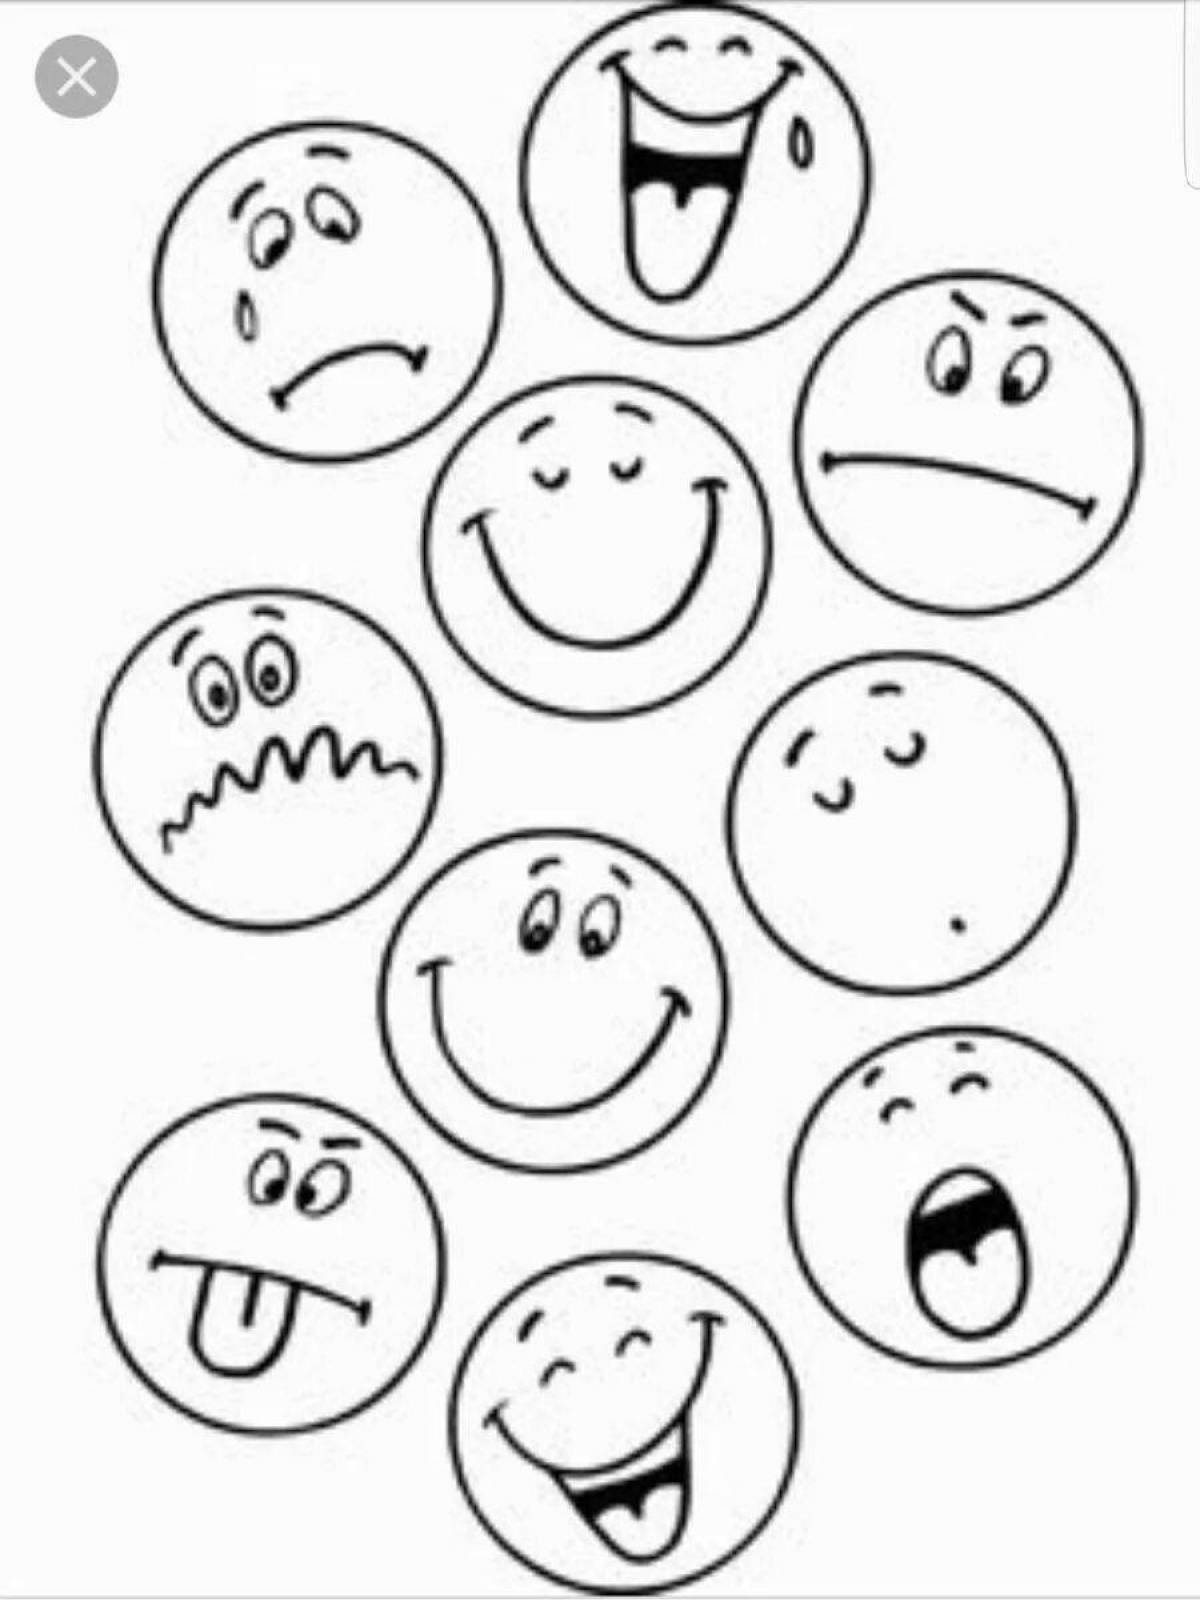 Smiling emotion coloring book for preschoolers